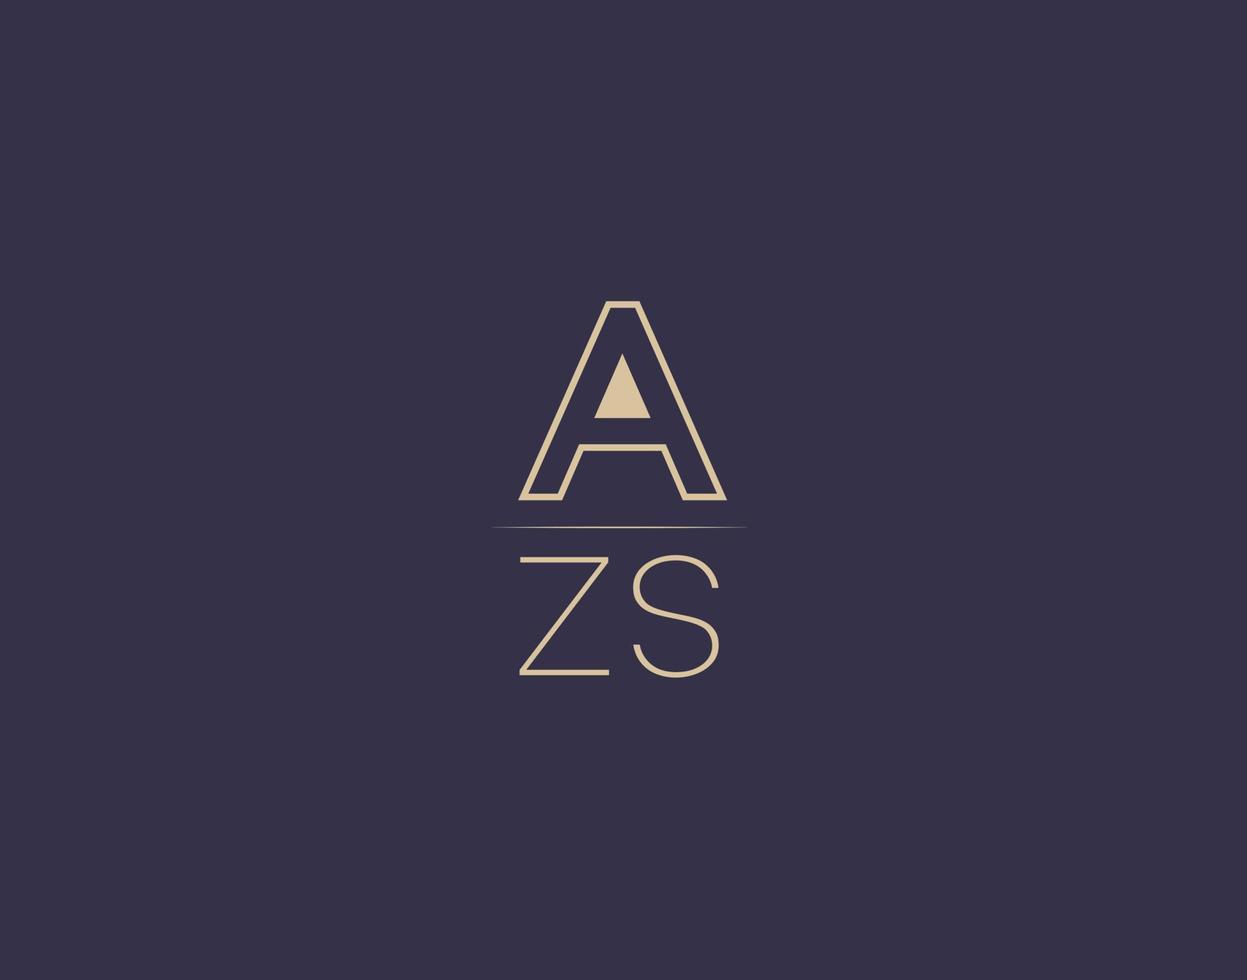 AZS letter logo design modern minimalist vector images